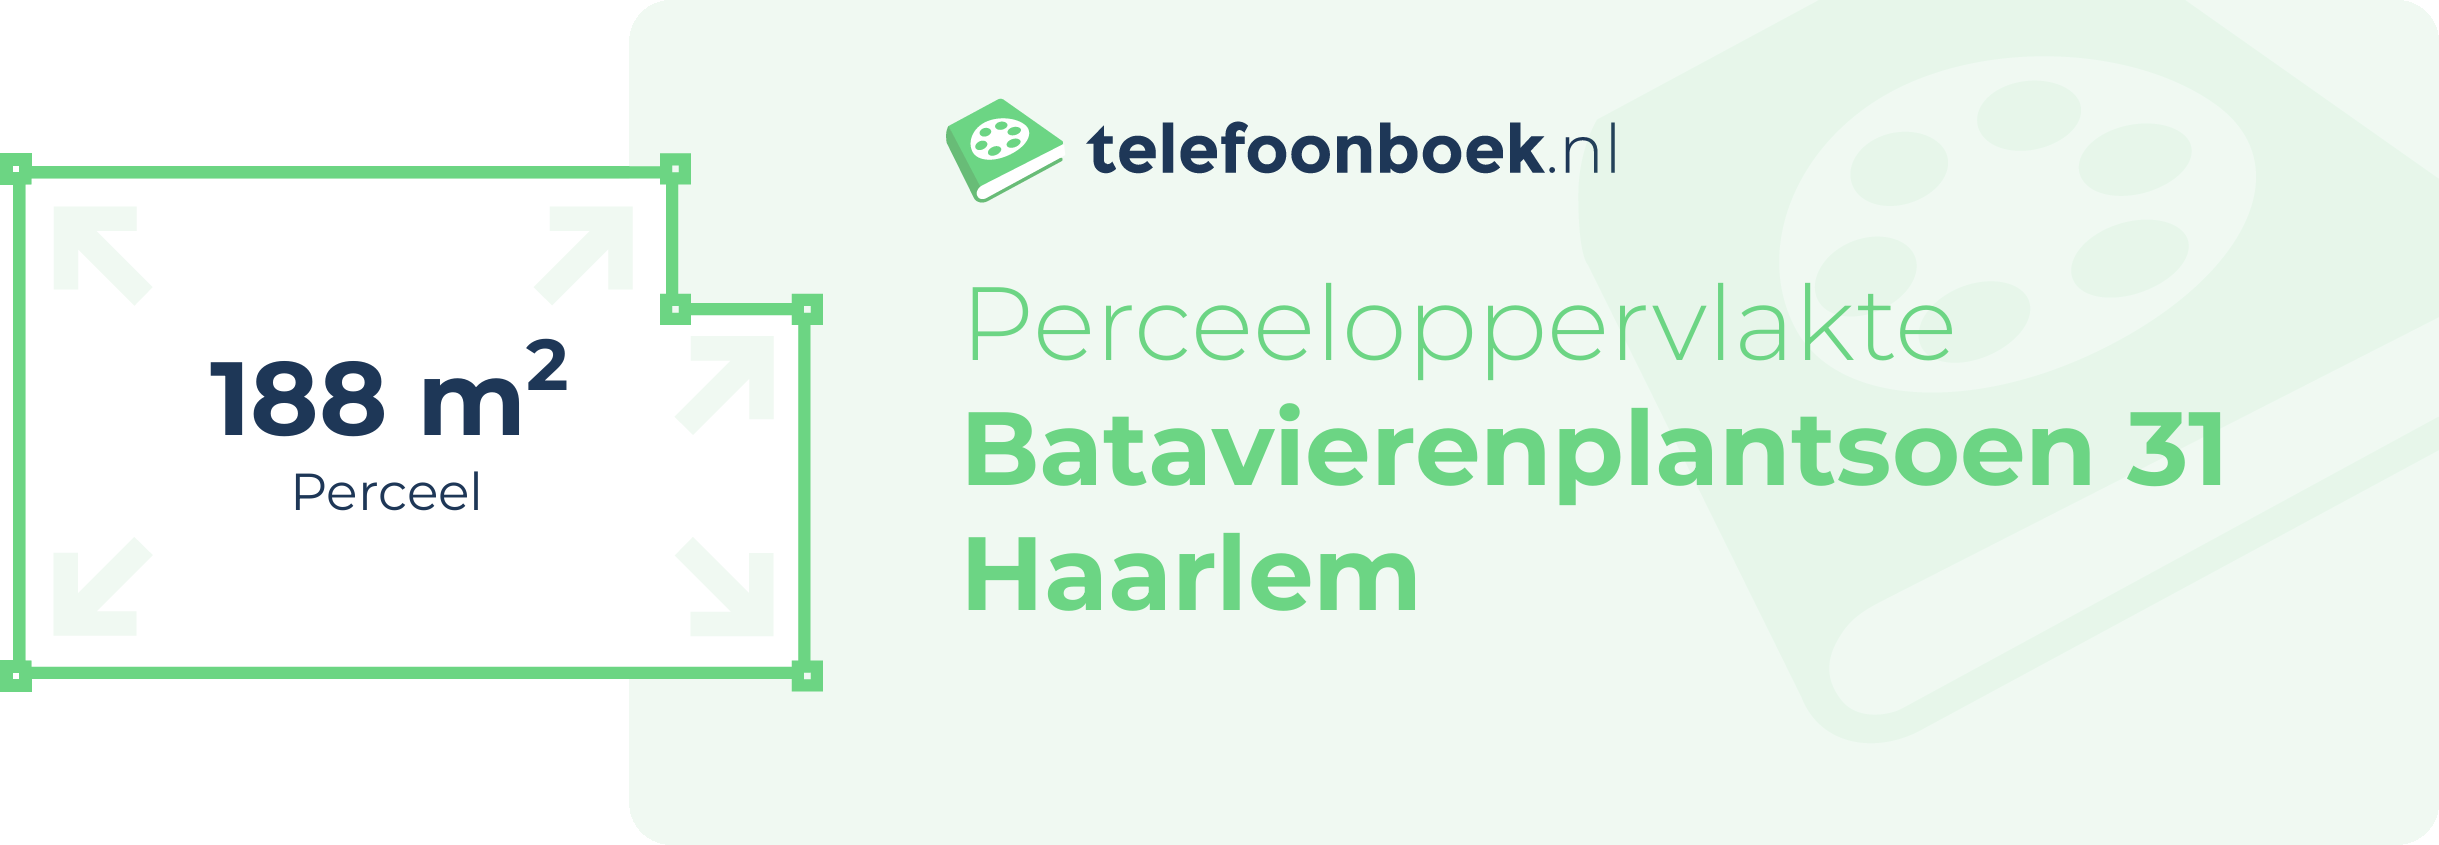 Perceeloppervlakte Batavierenplantsoen 31 Haarlem